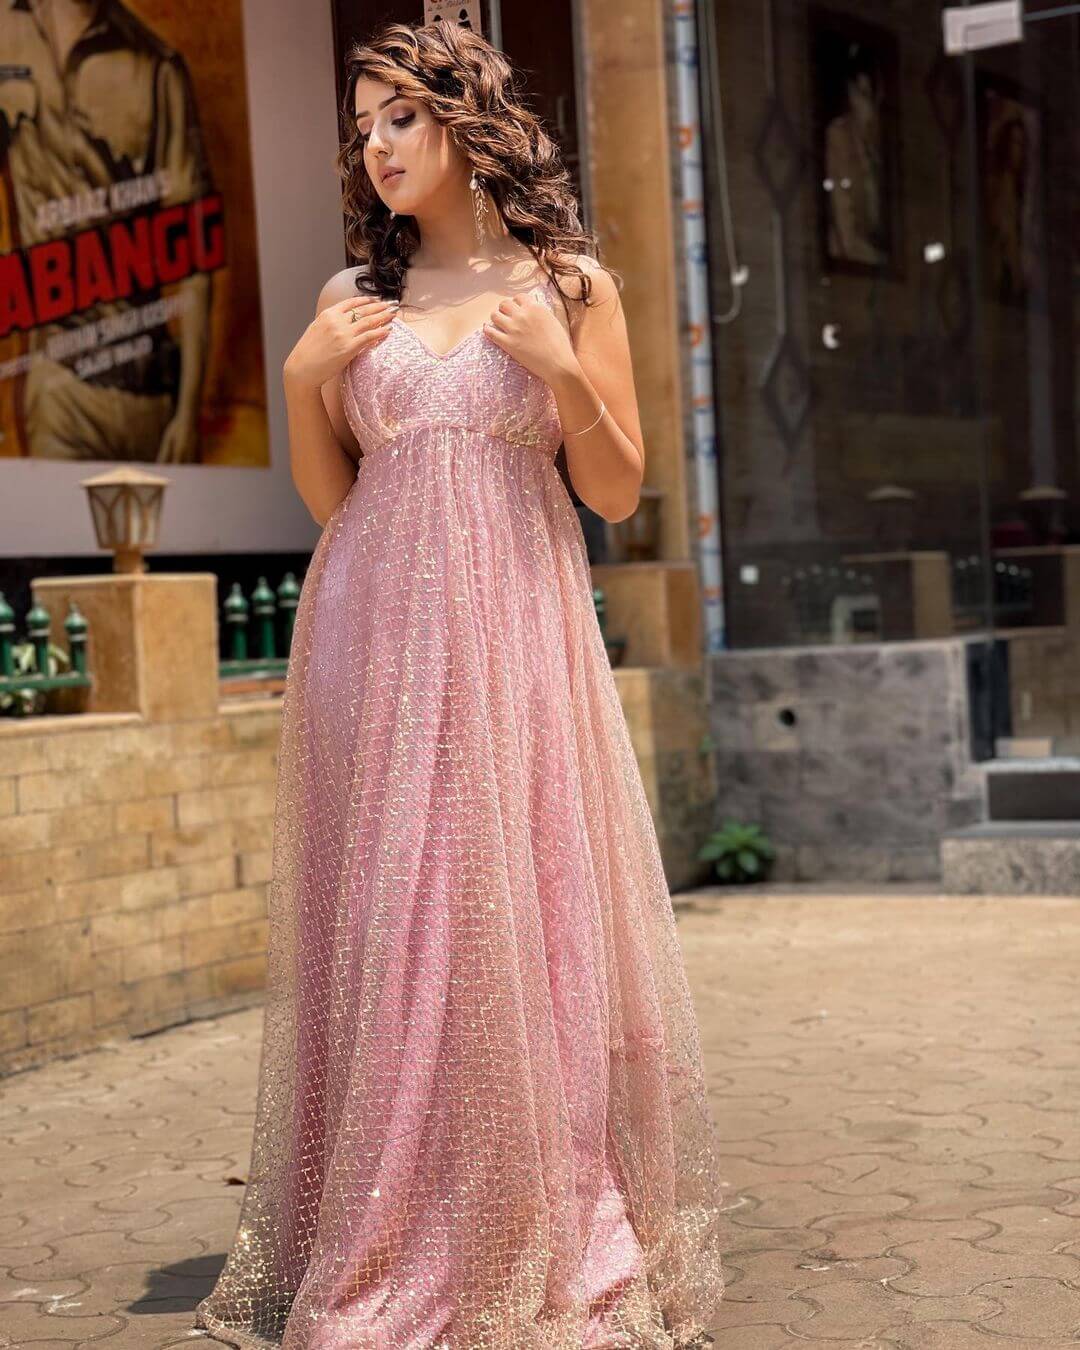 Daily Soap Fame Riya Sharma  Princess Look In Beautiful Pastel Pink Gown